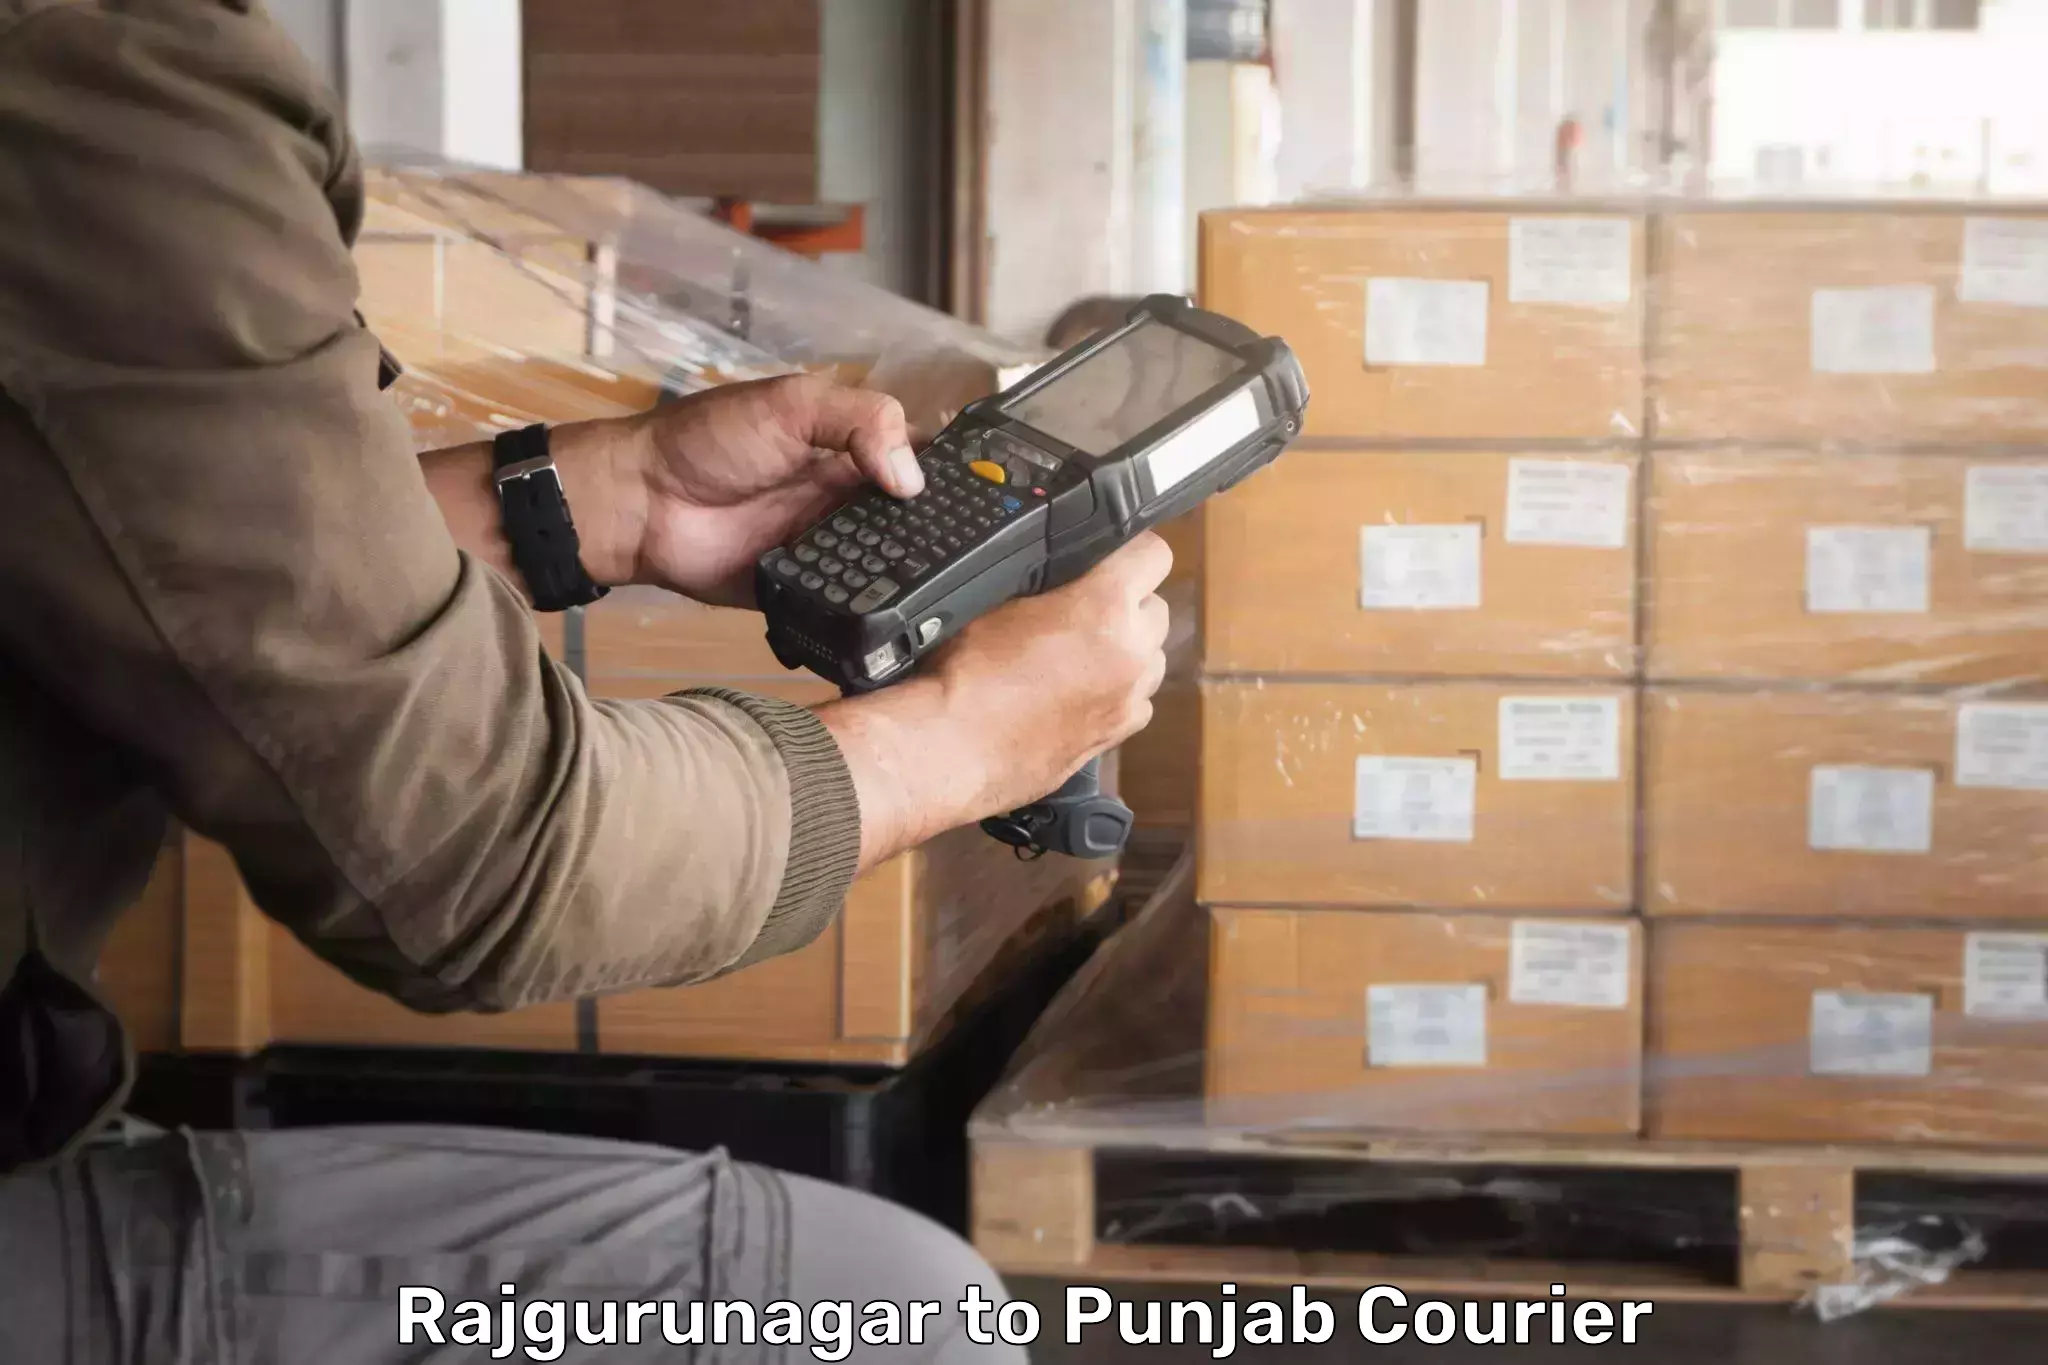 Courier dispatch services in Rajgurunagar to Mohali